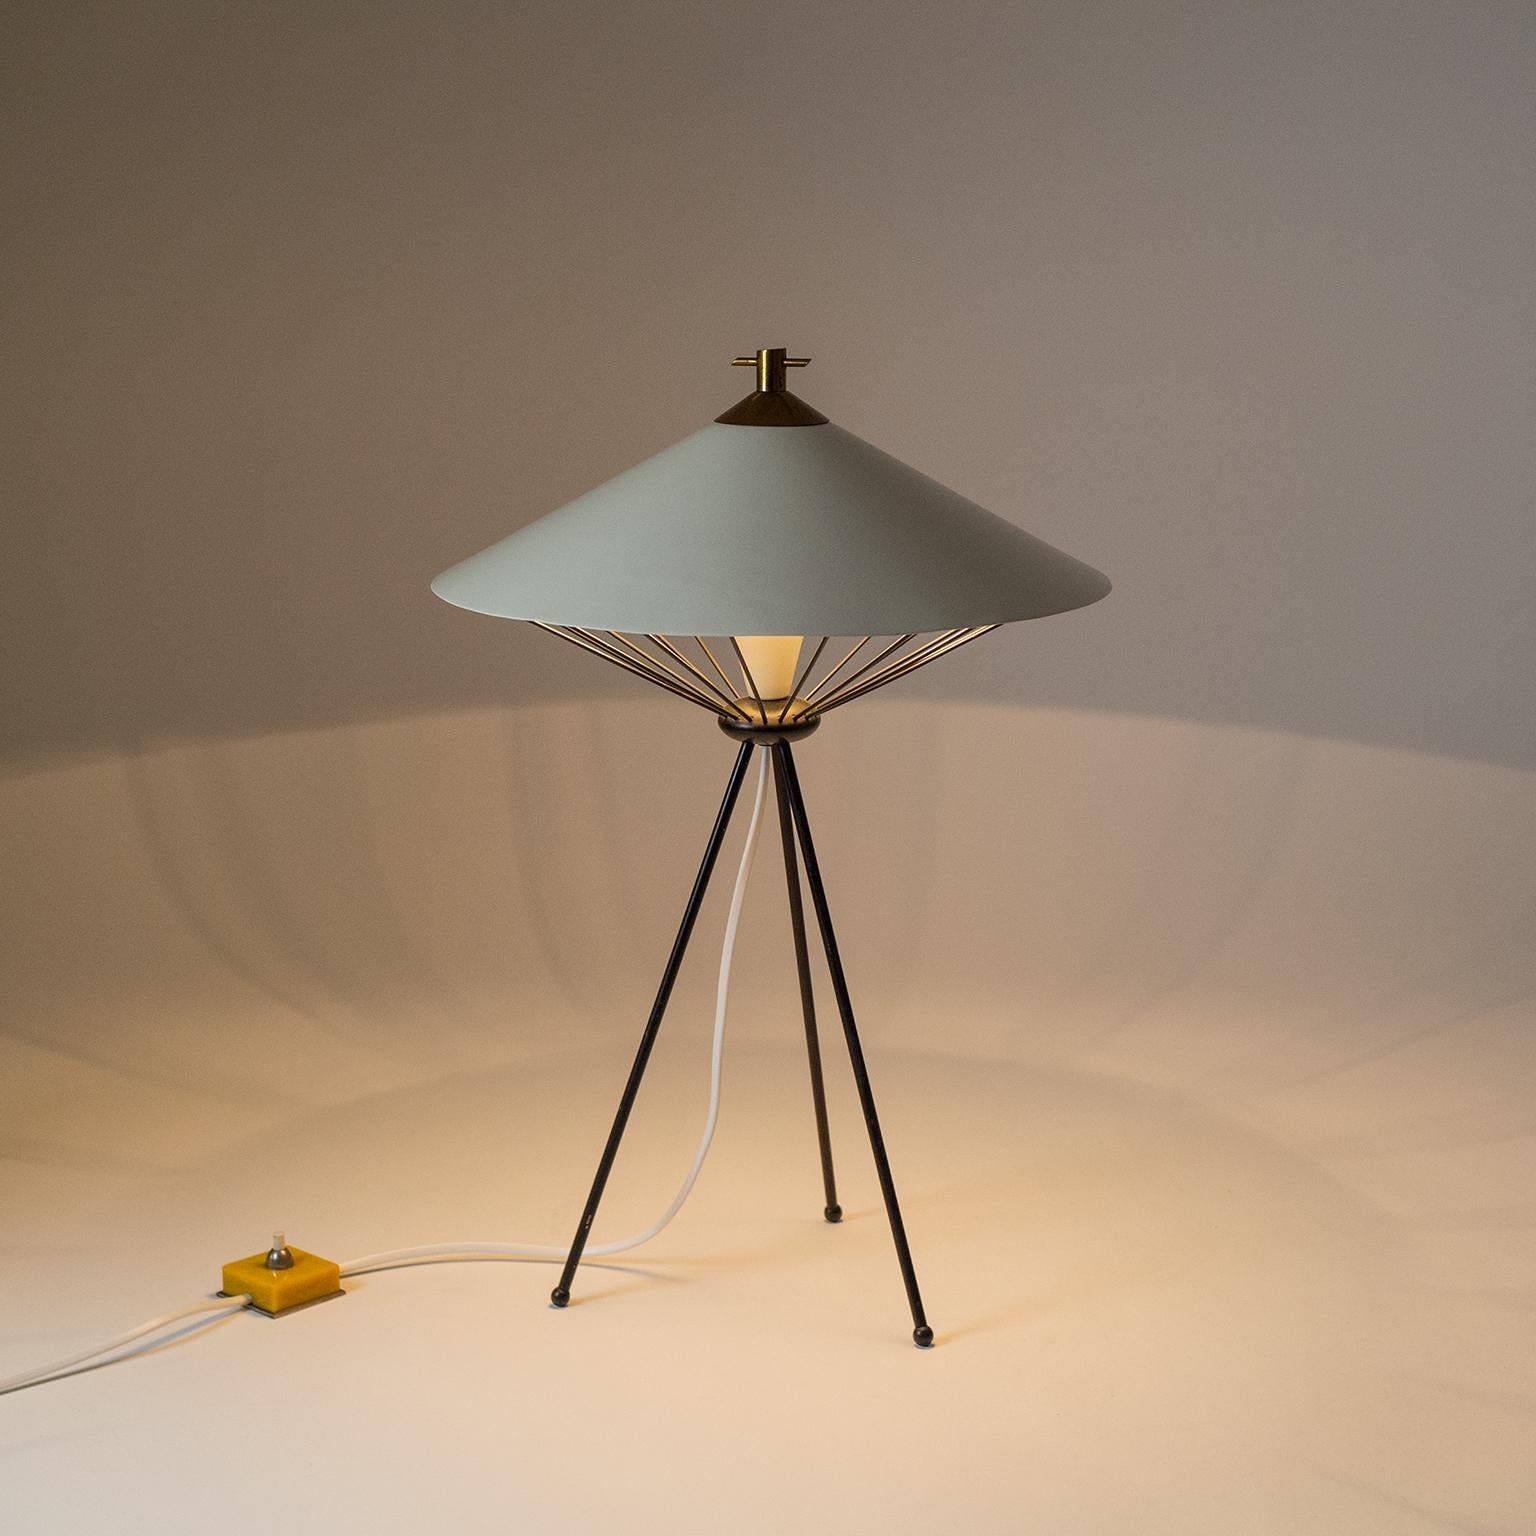 Modernist Italian Tripod Table Lamp, 1950s (Italienisch)